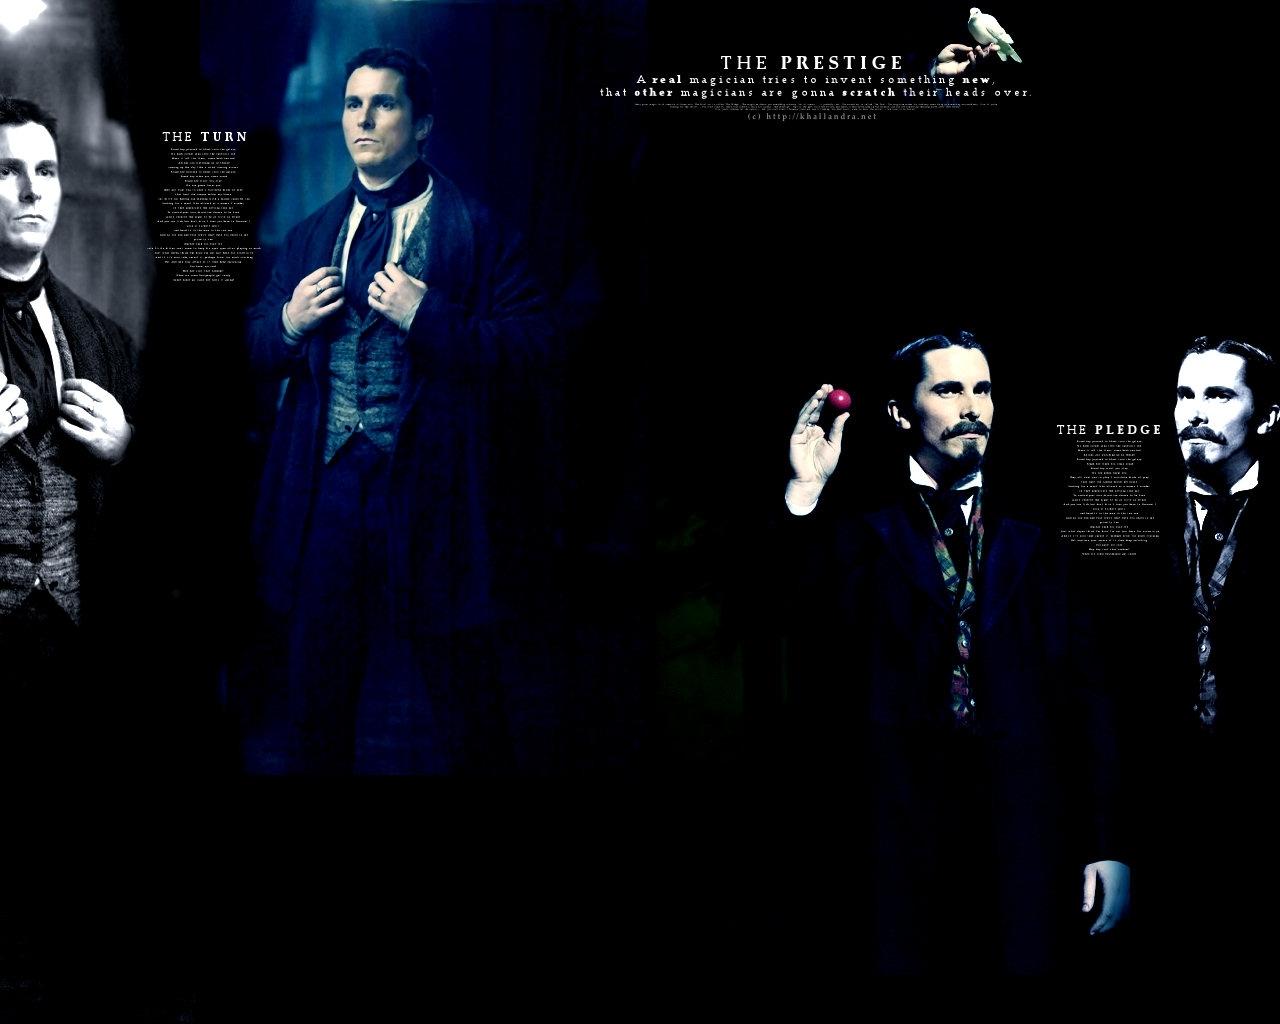 The Prestige image The Professor HD wallpaper and background photo